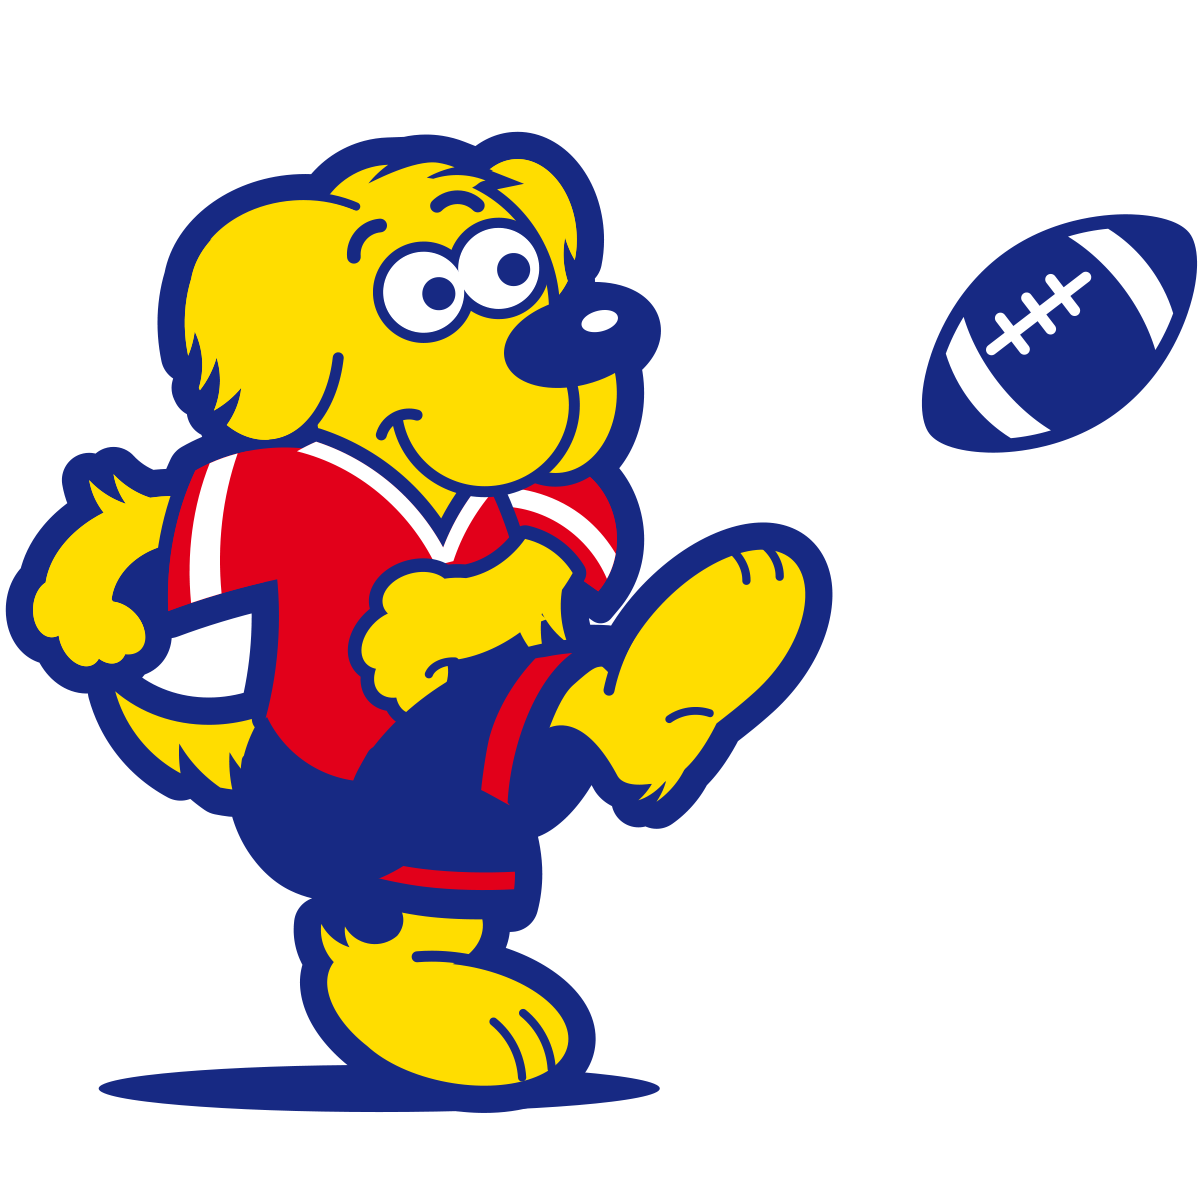 Huddle, the FootballTots mascot